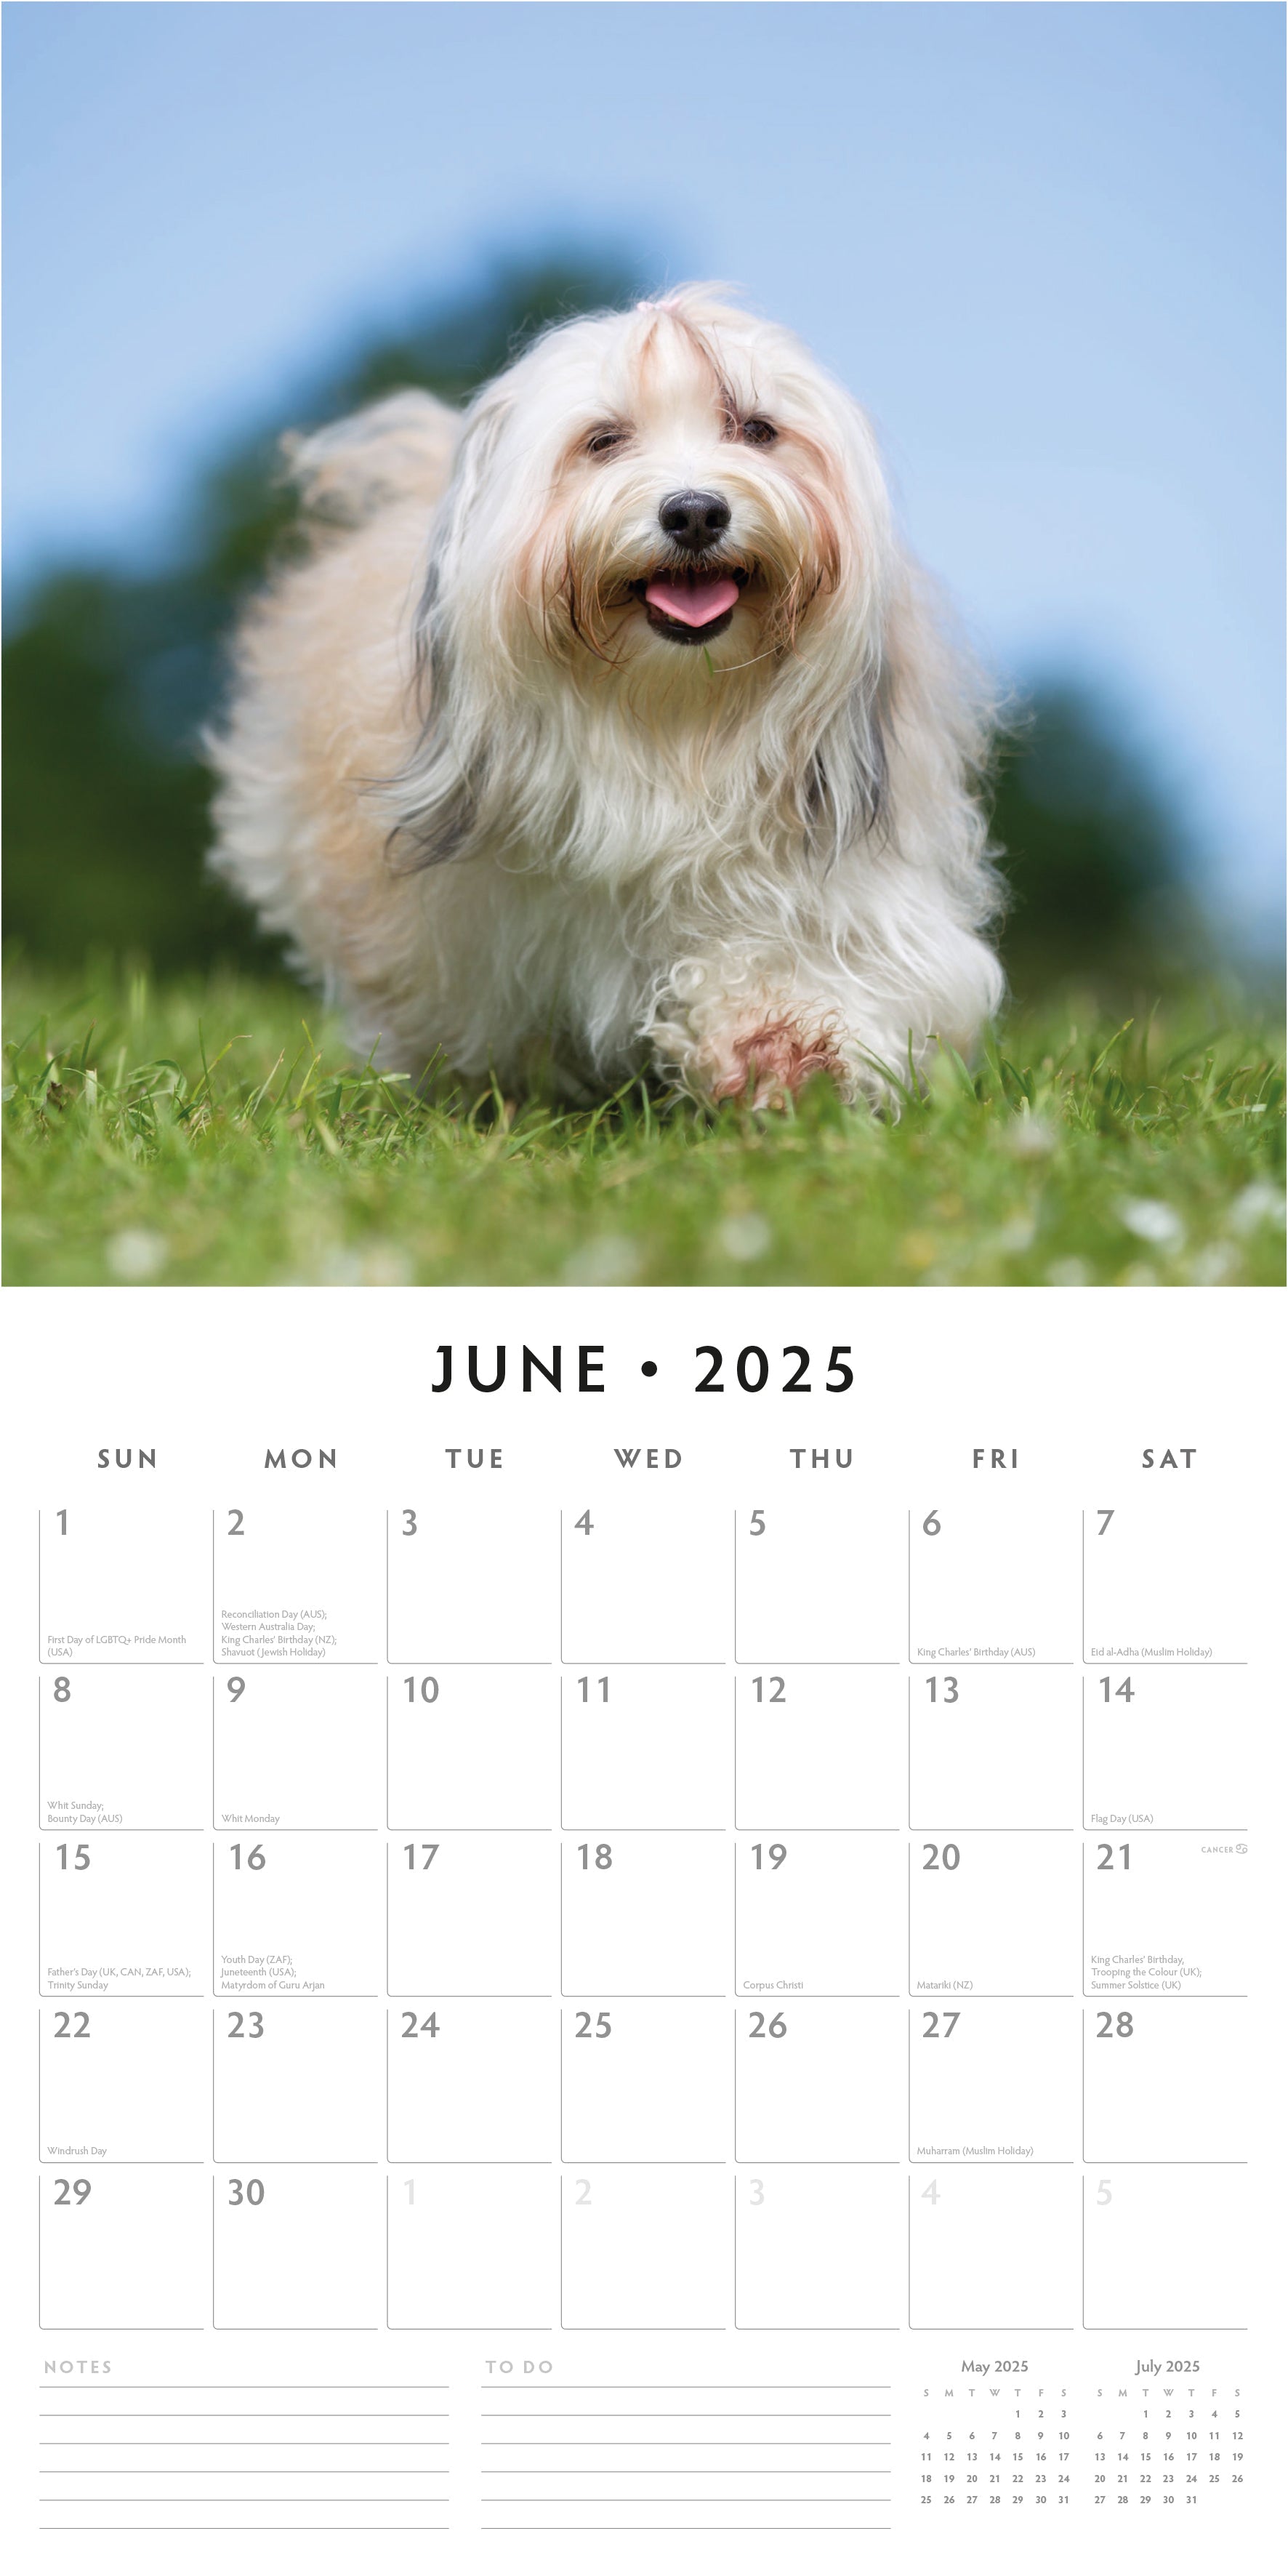 2025 Tibetan Terriers - Square Wall Calendar